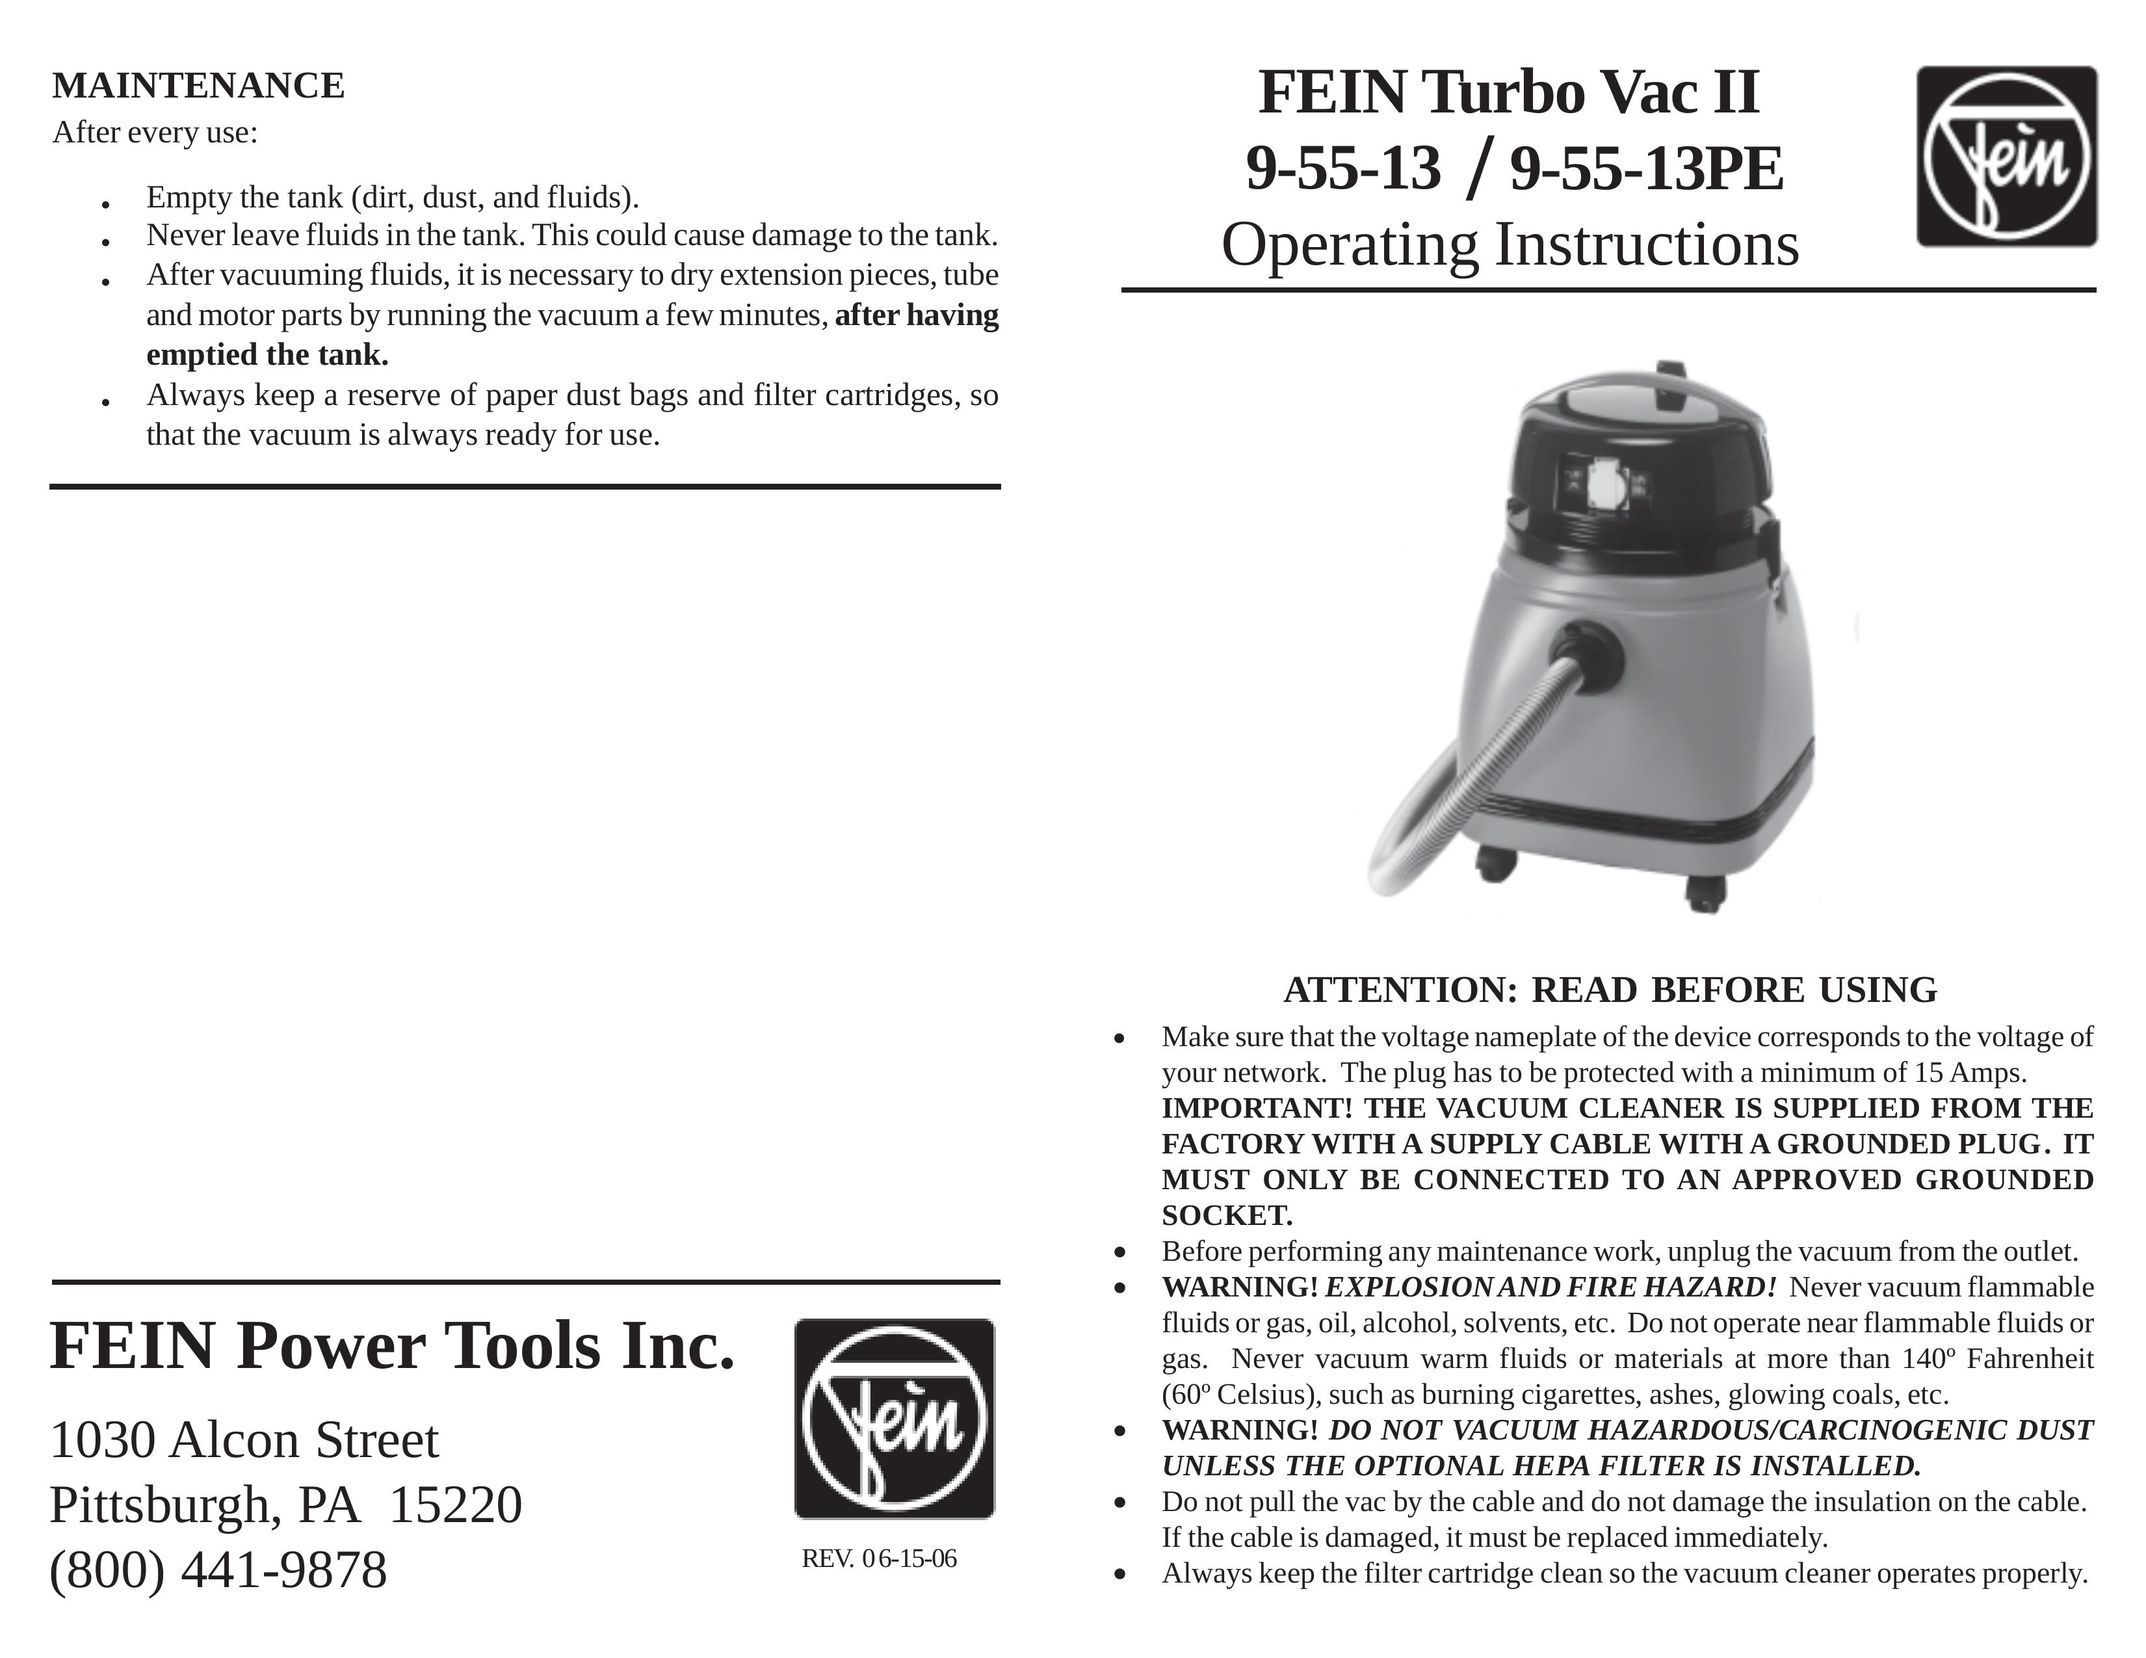 FEIN Power Tools 9-55-13 Vacuum Cleaner User Manual